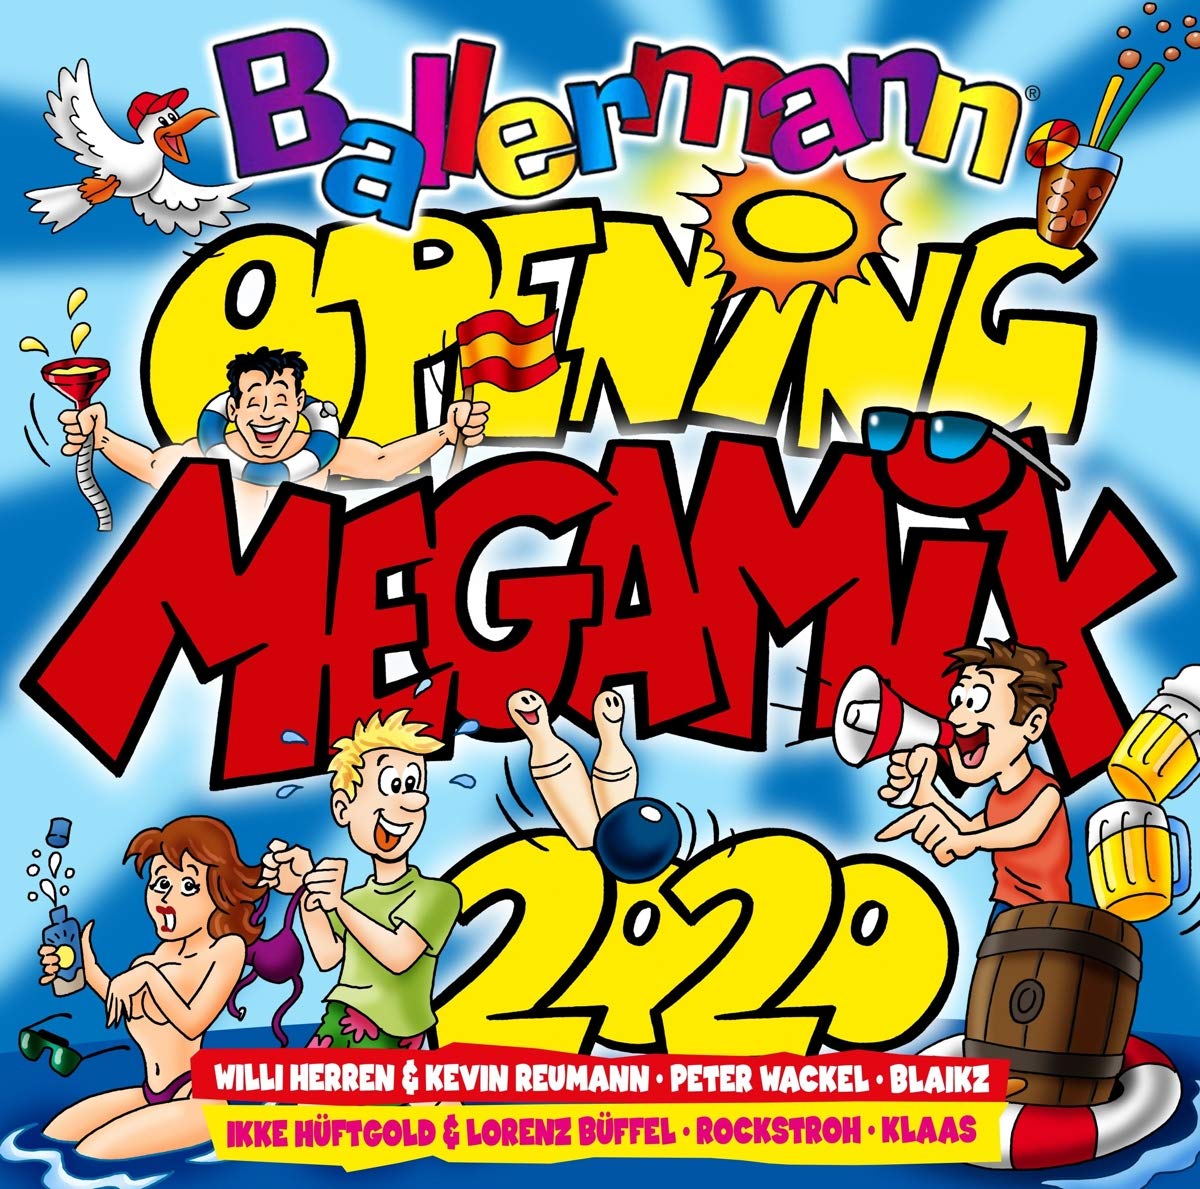 Ballermann Opening Megamix 2020